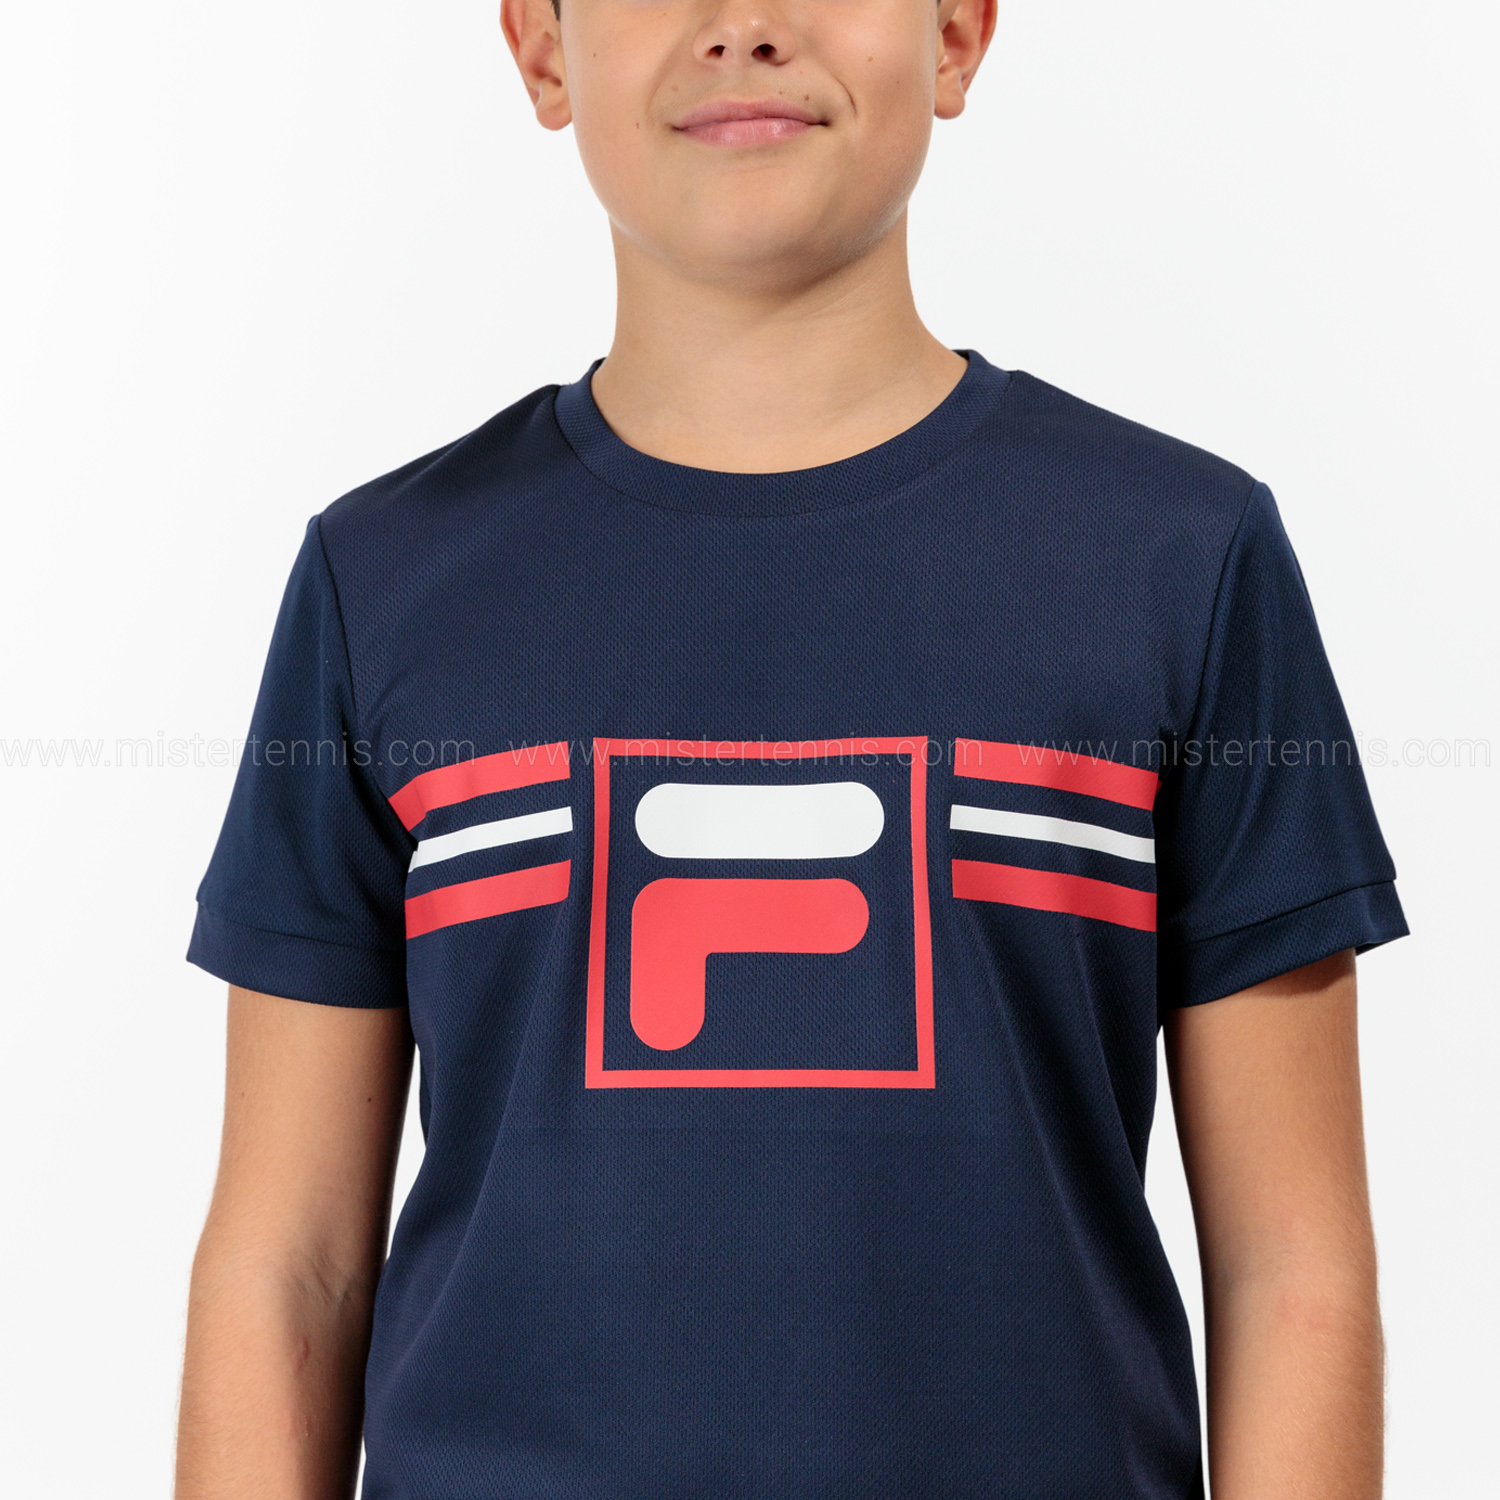 Fila Oscar T-Shirt Boy - Navy